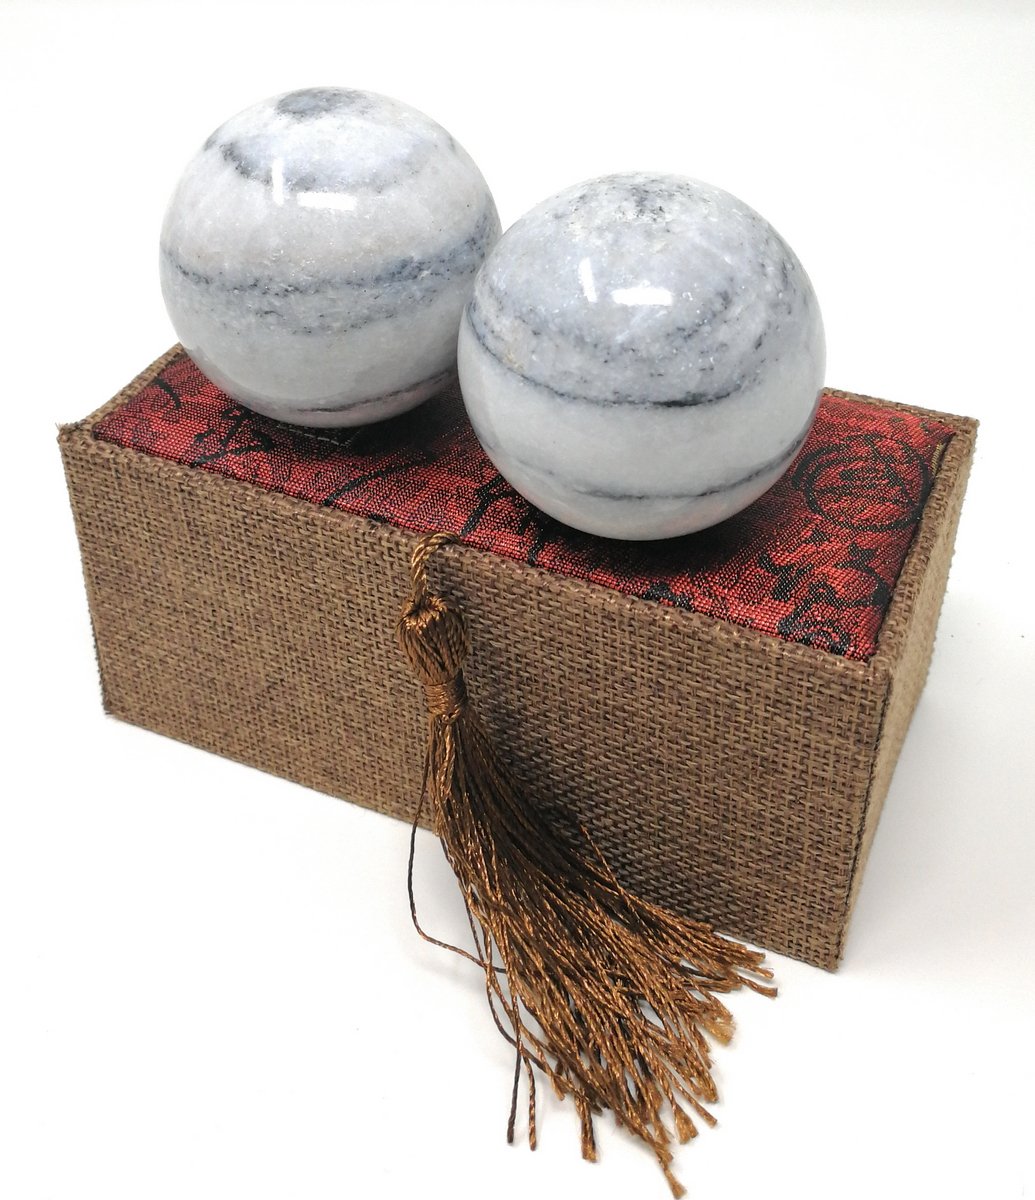 THY COLLECTIBLES Ming Dynasty Baoding Zen Balls